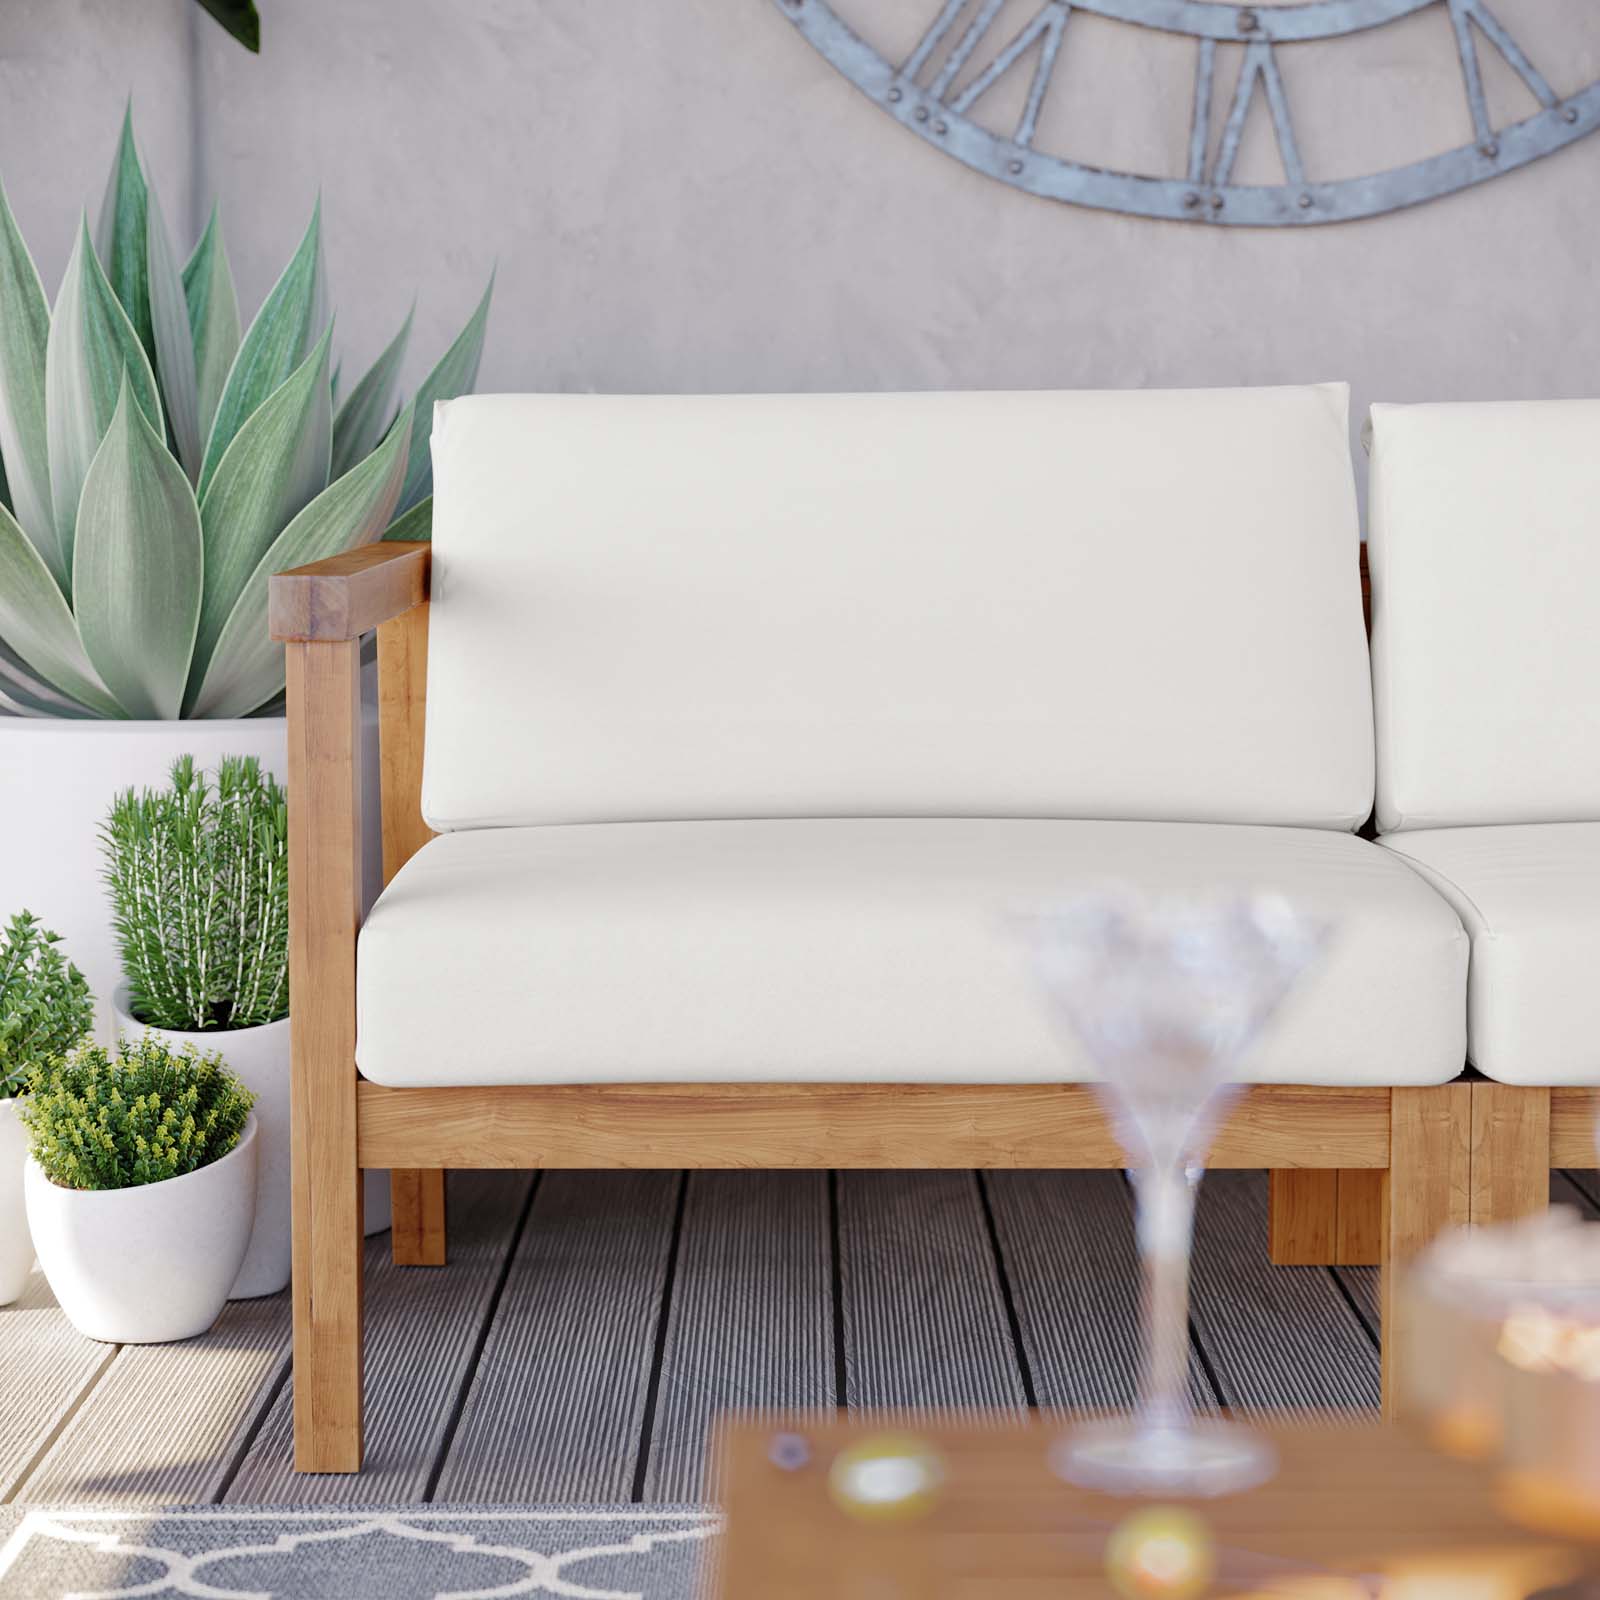 Modway Outdoor Sofas - Bayport Outdoor Patio Teak Wood 2-Seater Loveseat Natural White